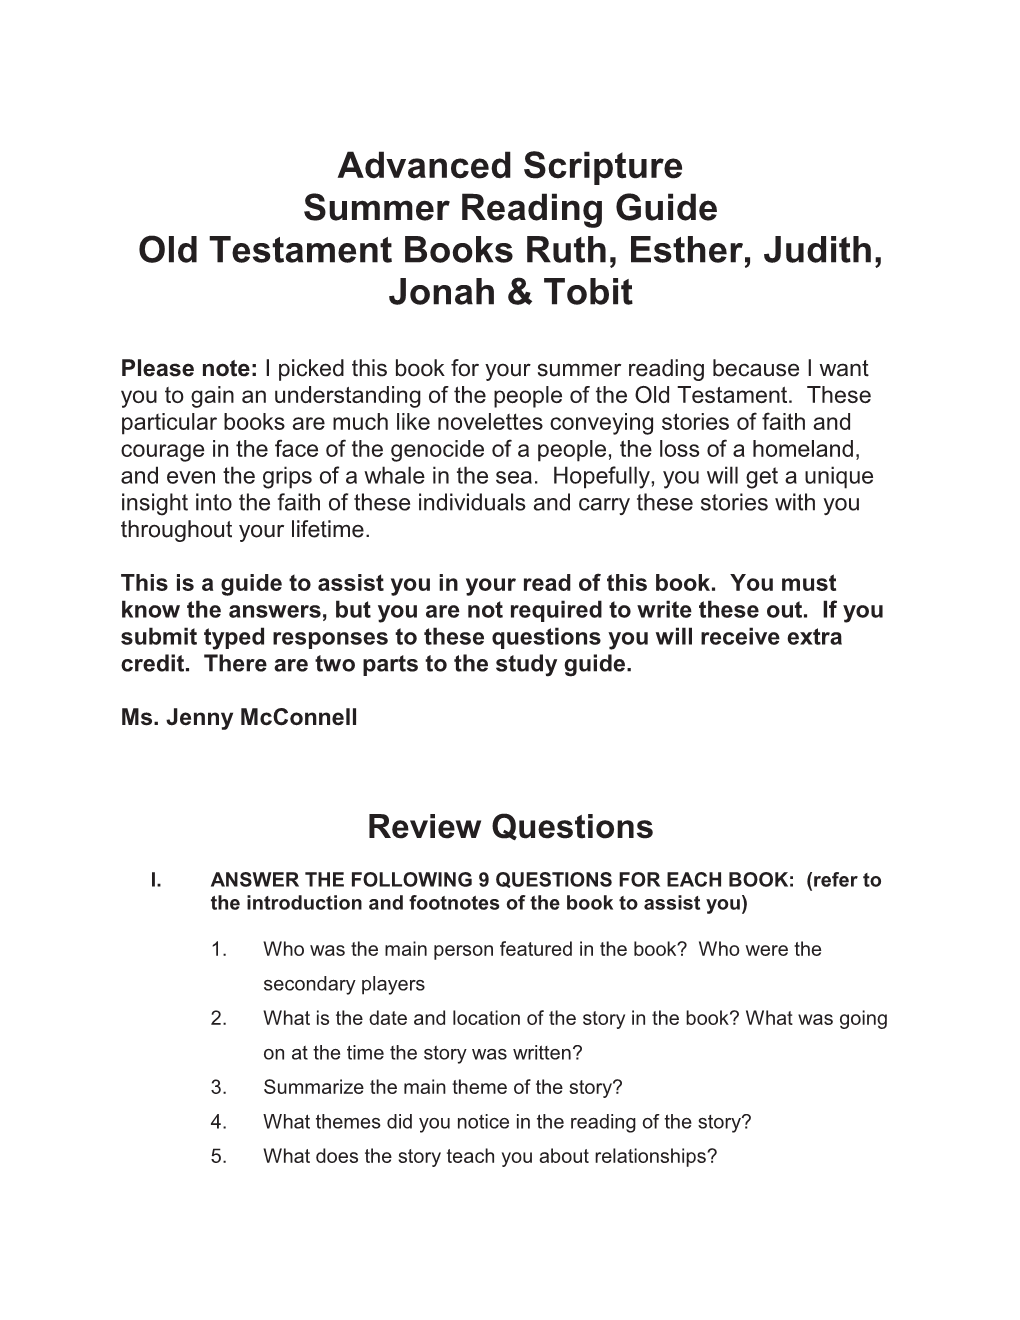 Advanced Scripture Summer Reading Guide Old Testament Books Ruth, Esther, Judith, Jonah & Tobit